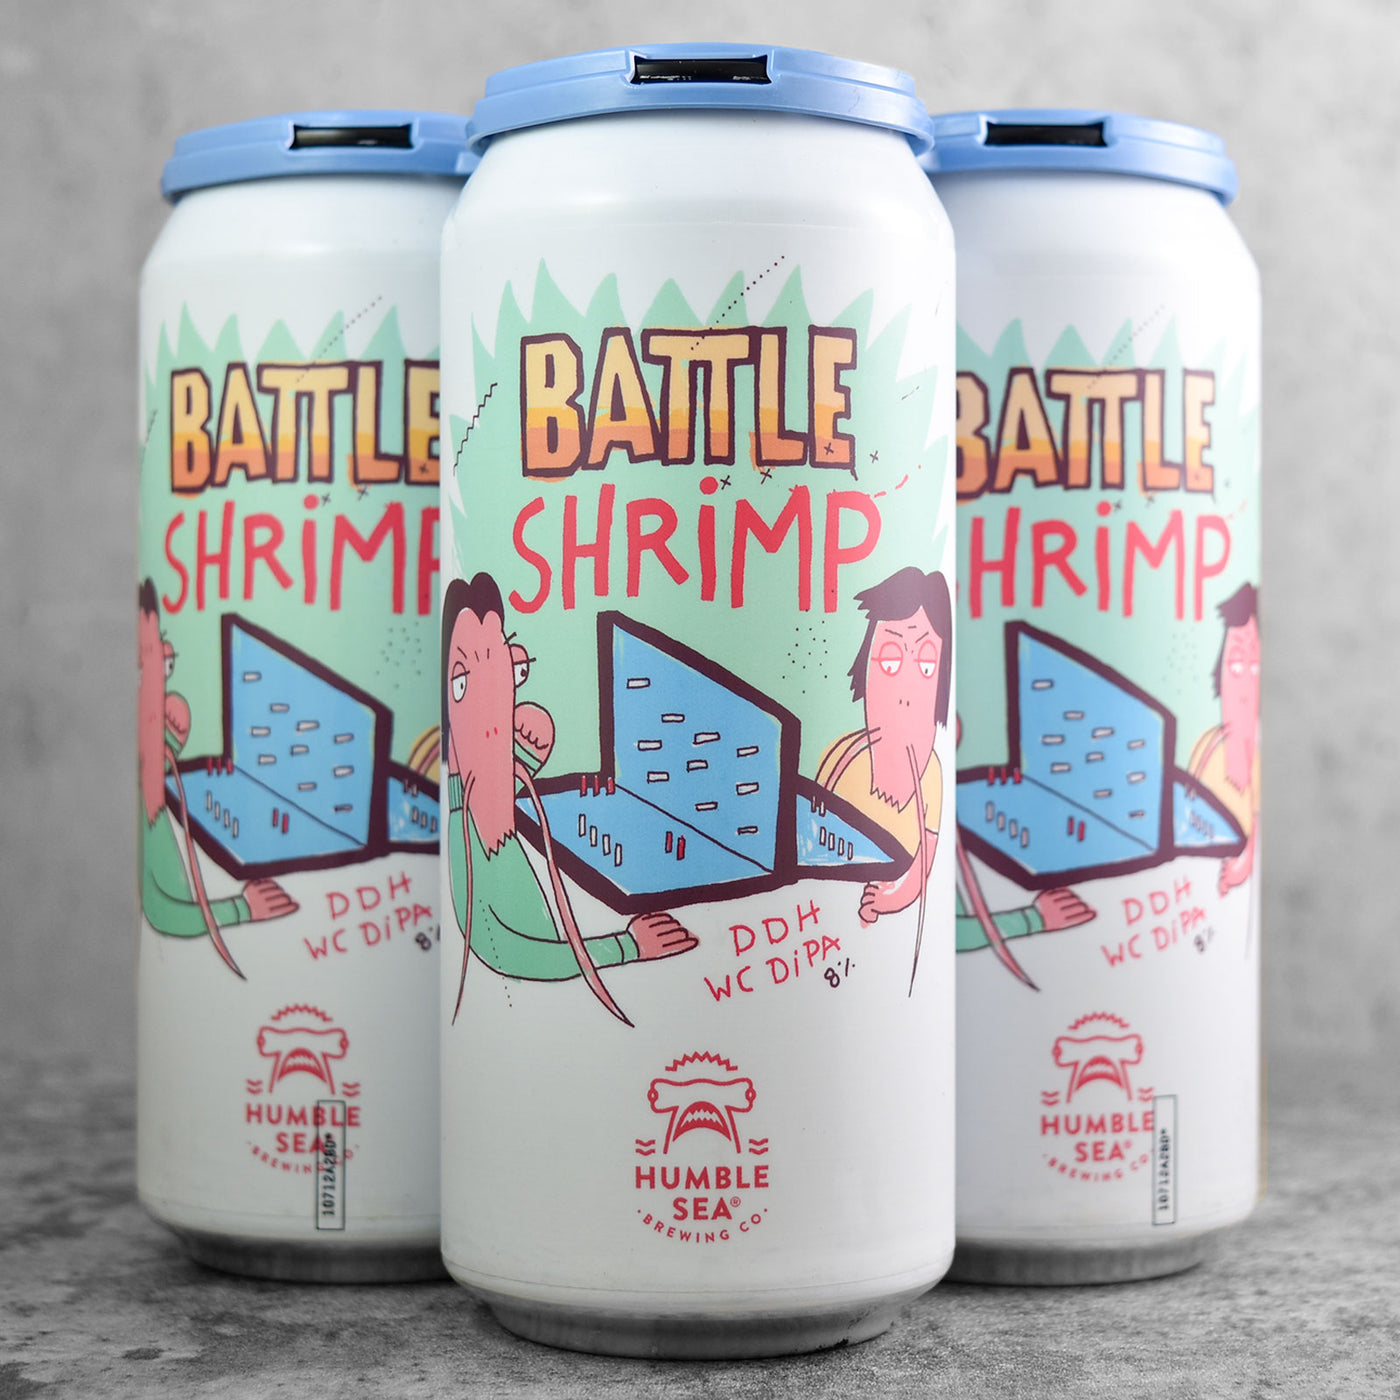 Humble Sea Battle Shrimp